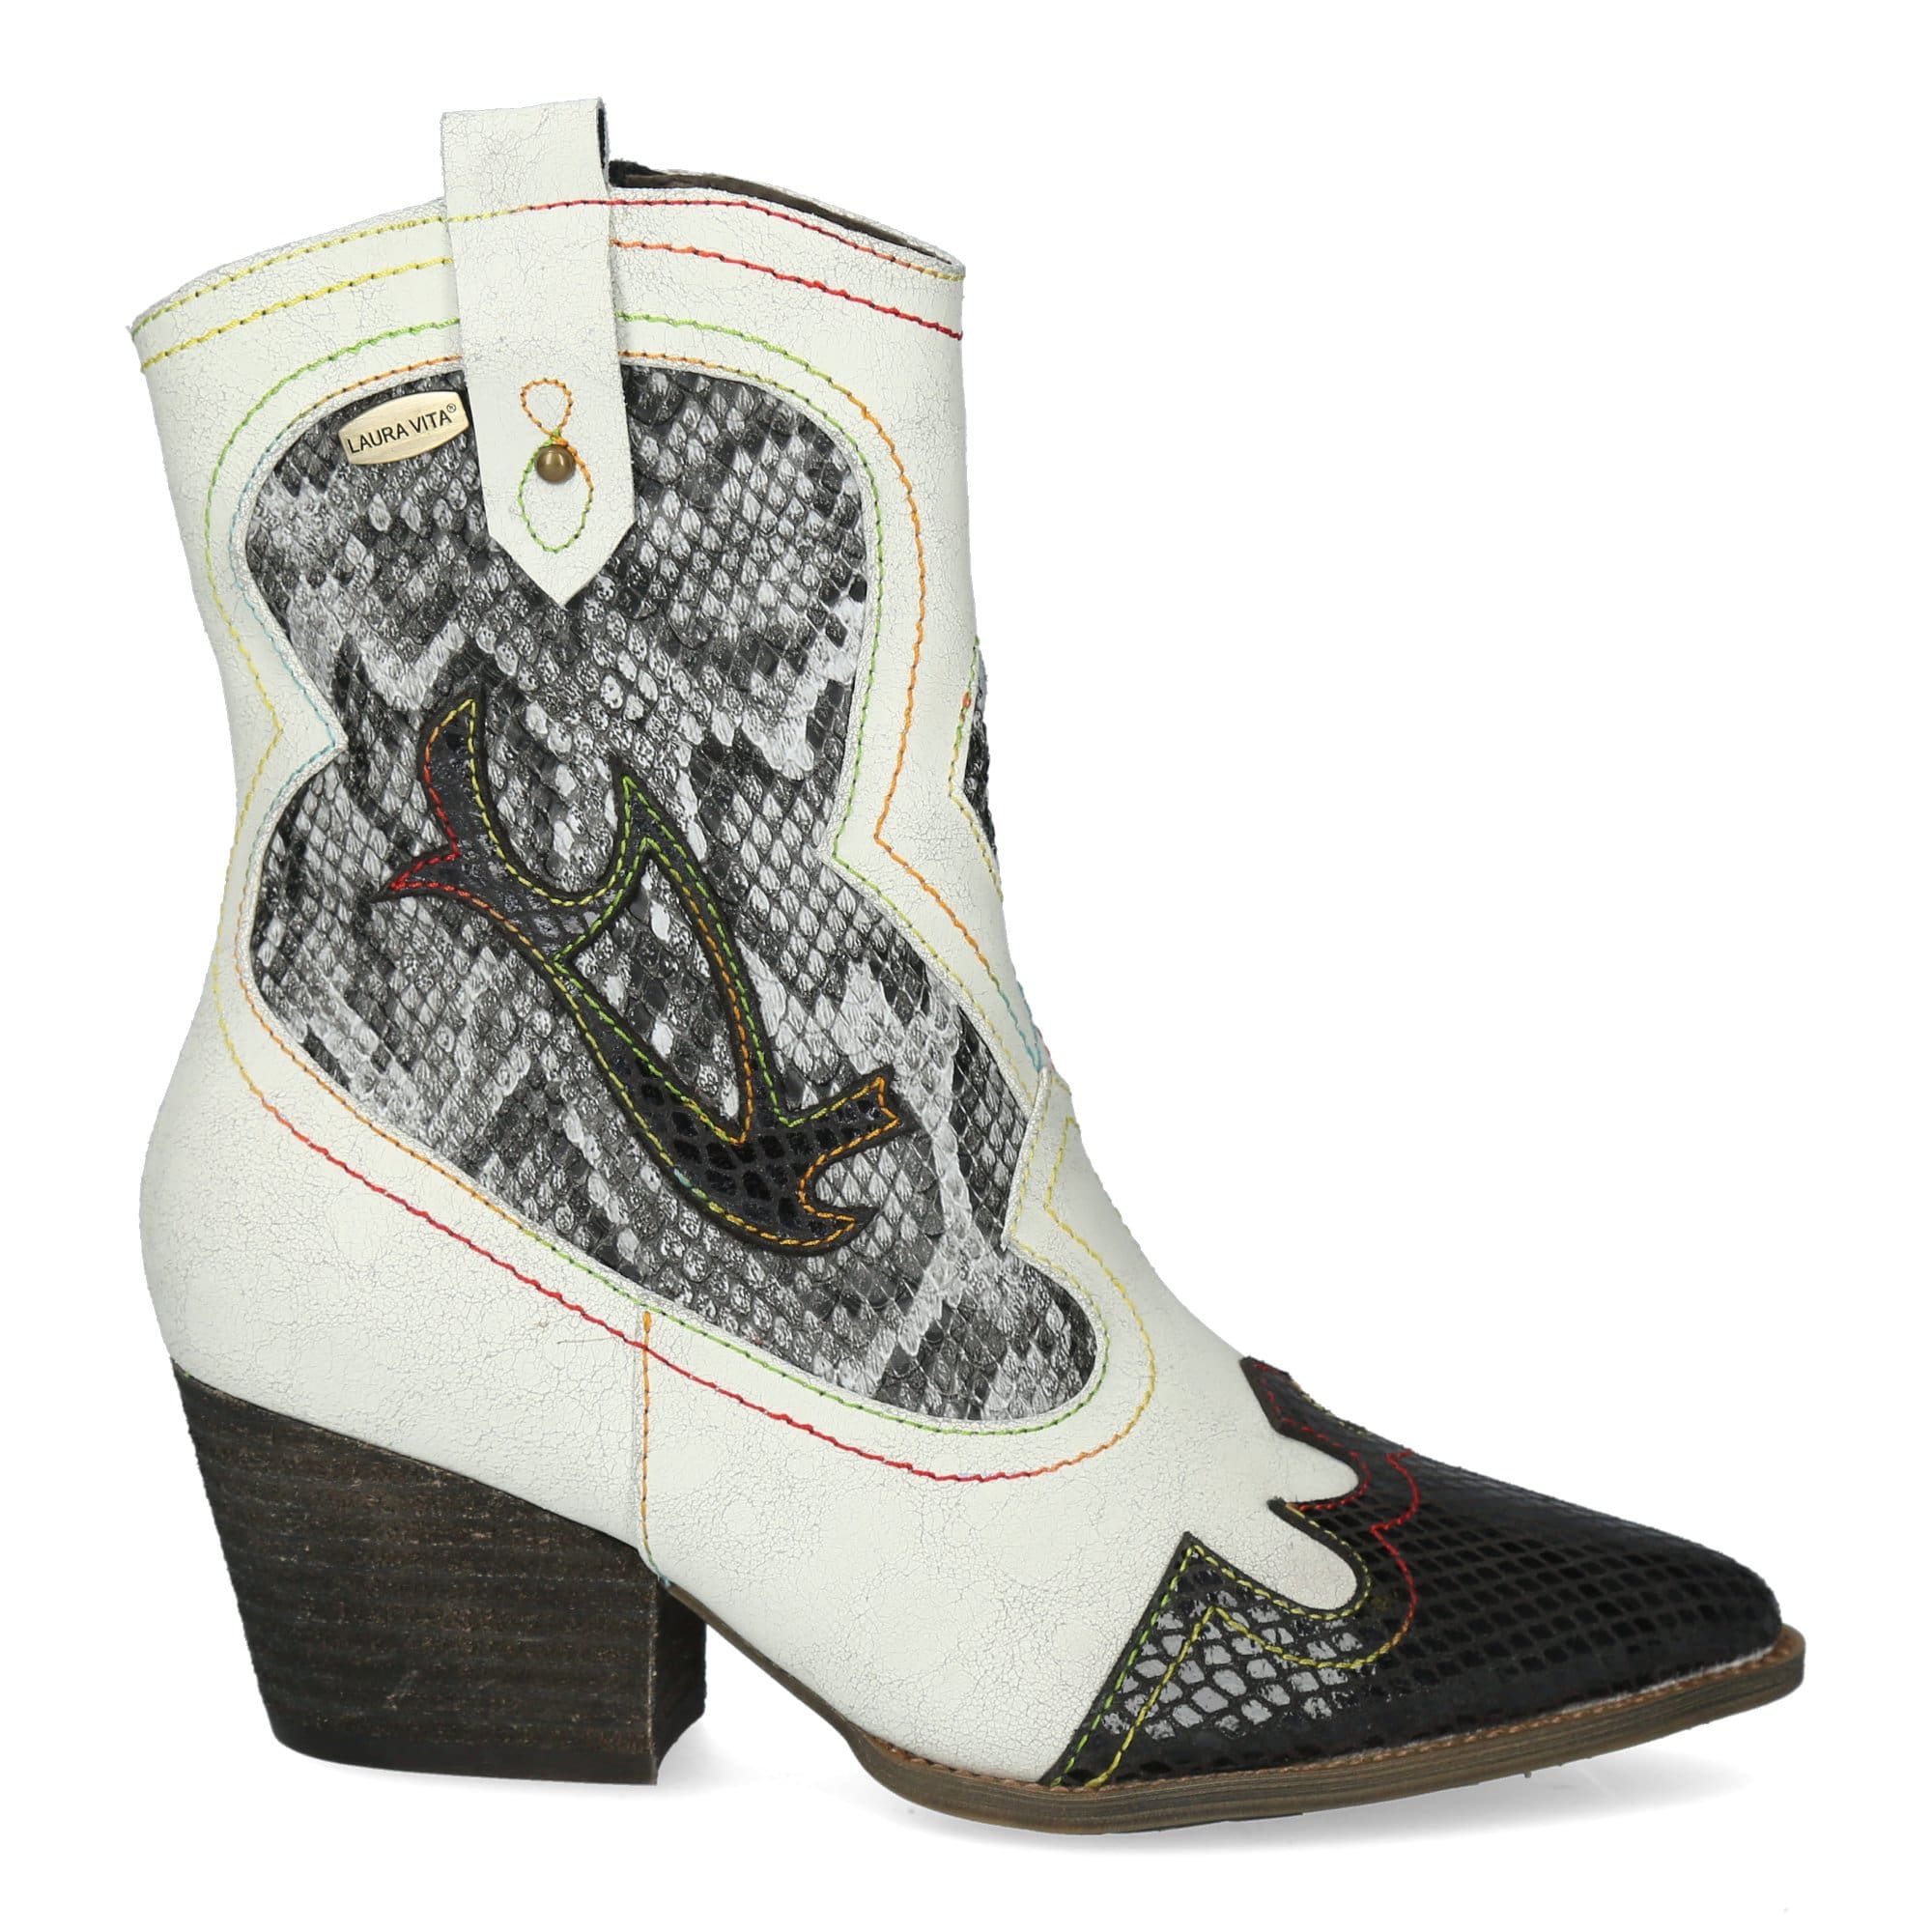 Chaussure GACLILIEO 10 - 35 / Noir - Boots